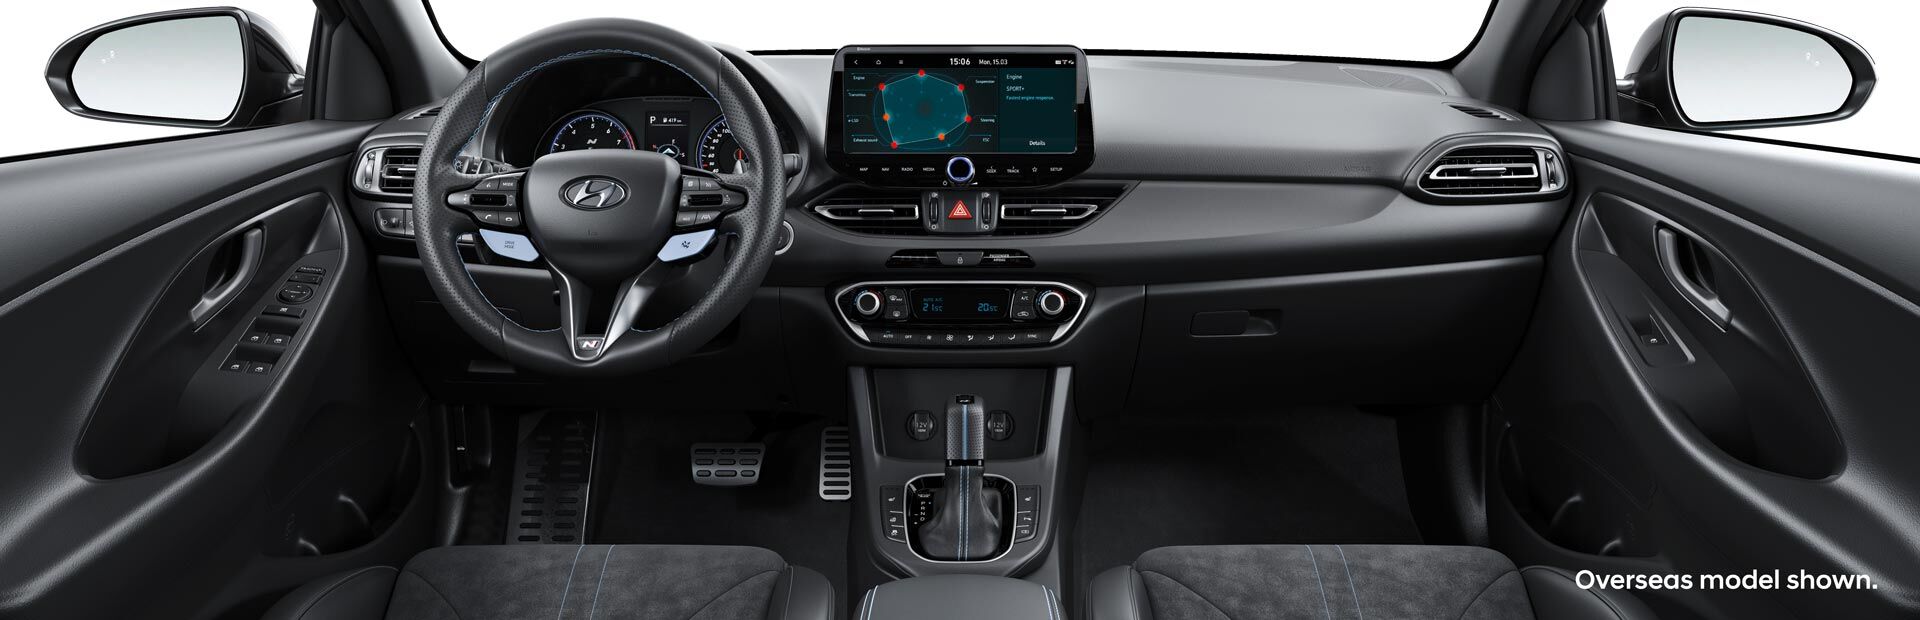 Extra-Boost dank Automatik: Hyundai i30 N - WELT